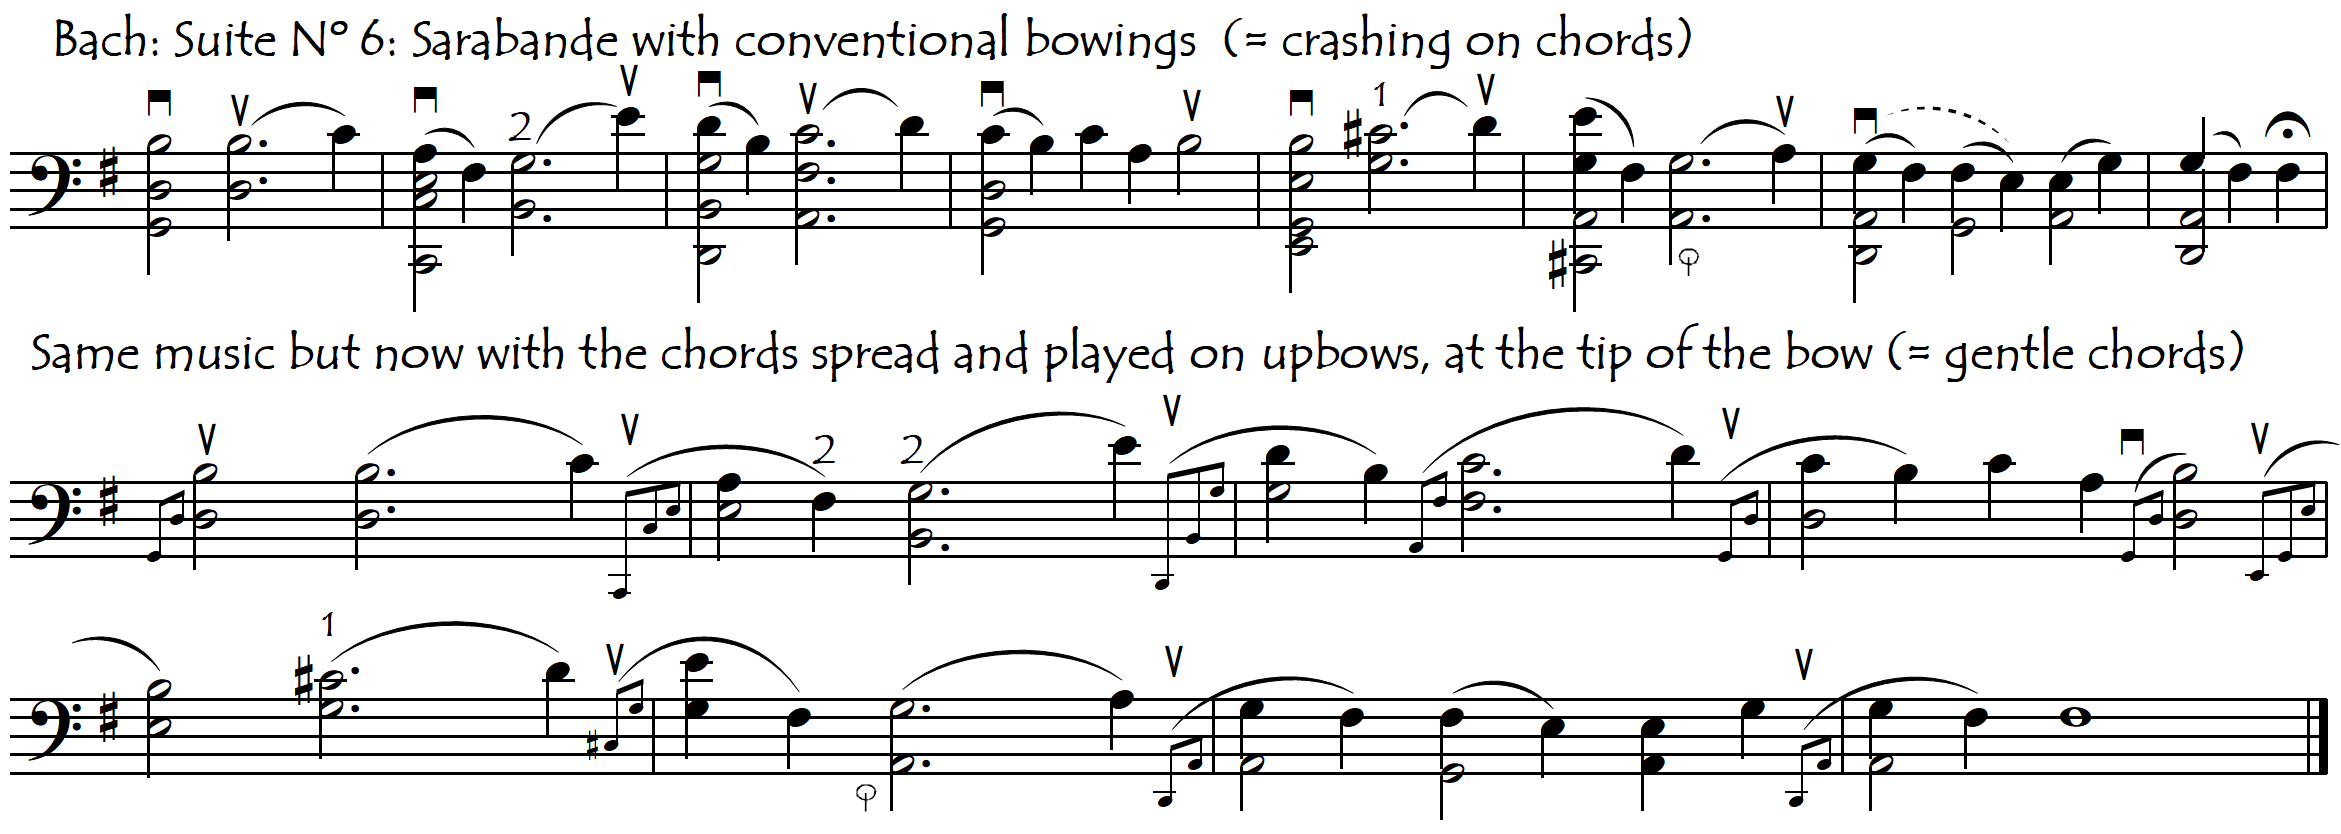 chords crunch or upbow Bach VI Sarabande